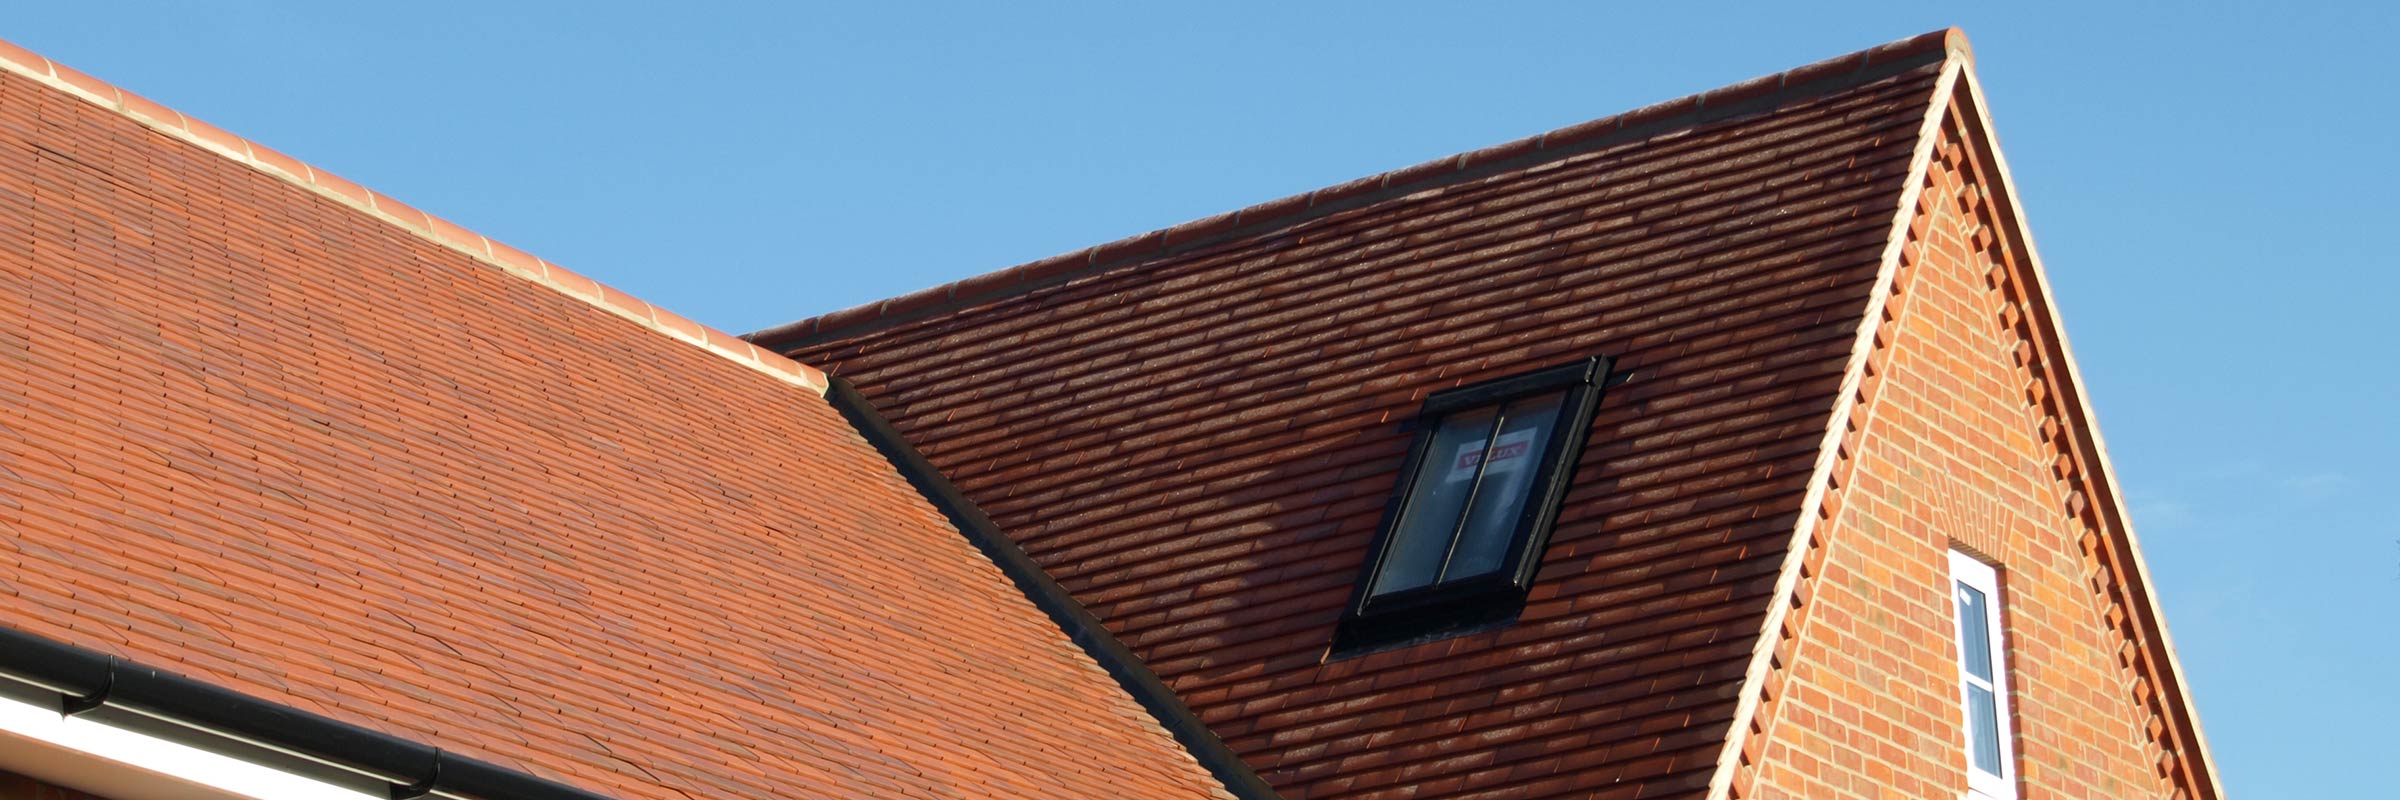 Paul Nunn Roofing Ltd-Roof Tiling-Bury St Edmunds-Ipswich-Newmarket-Cambridge-Suffolk-Cambridgeshire